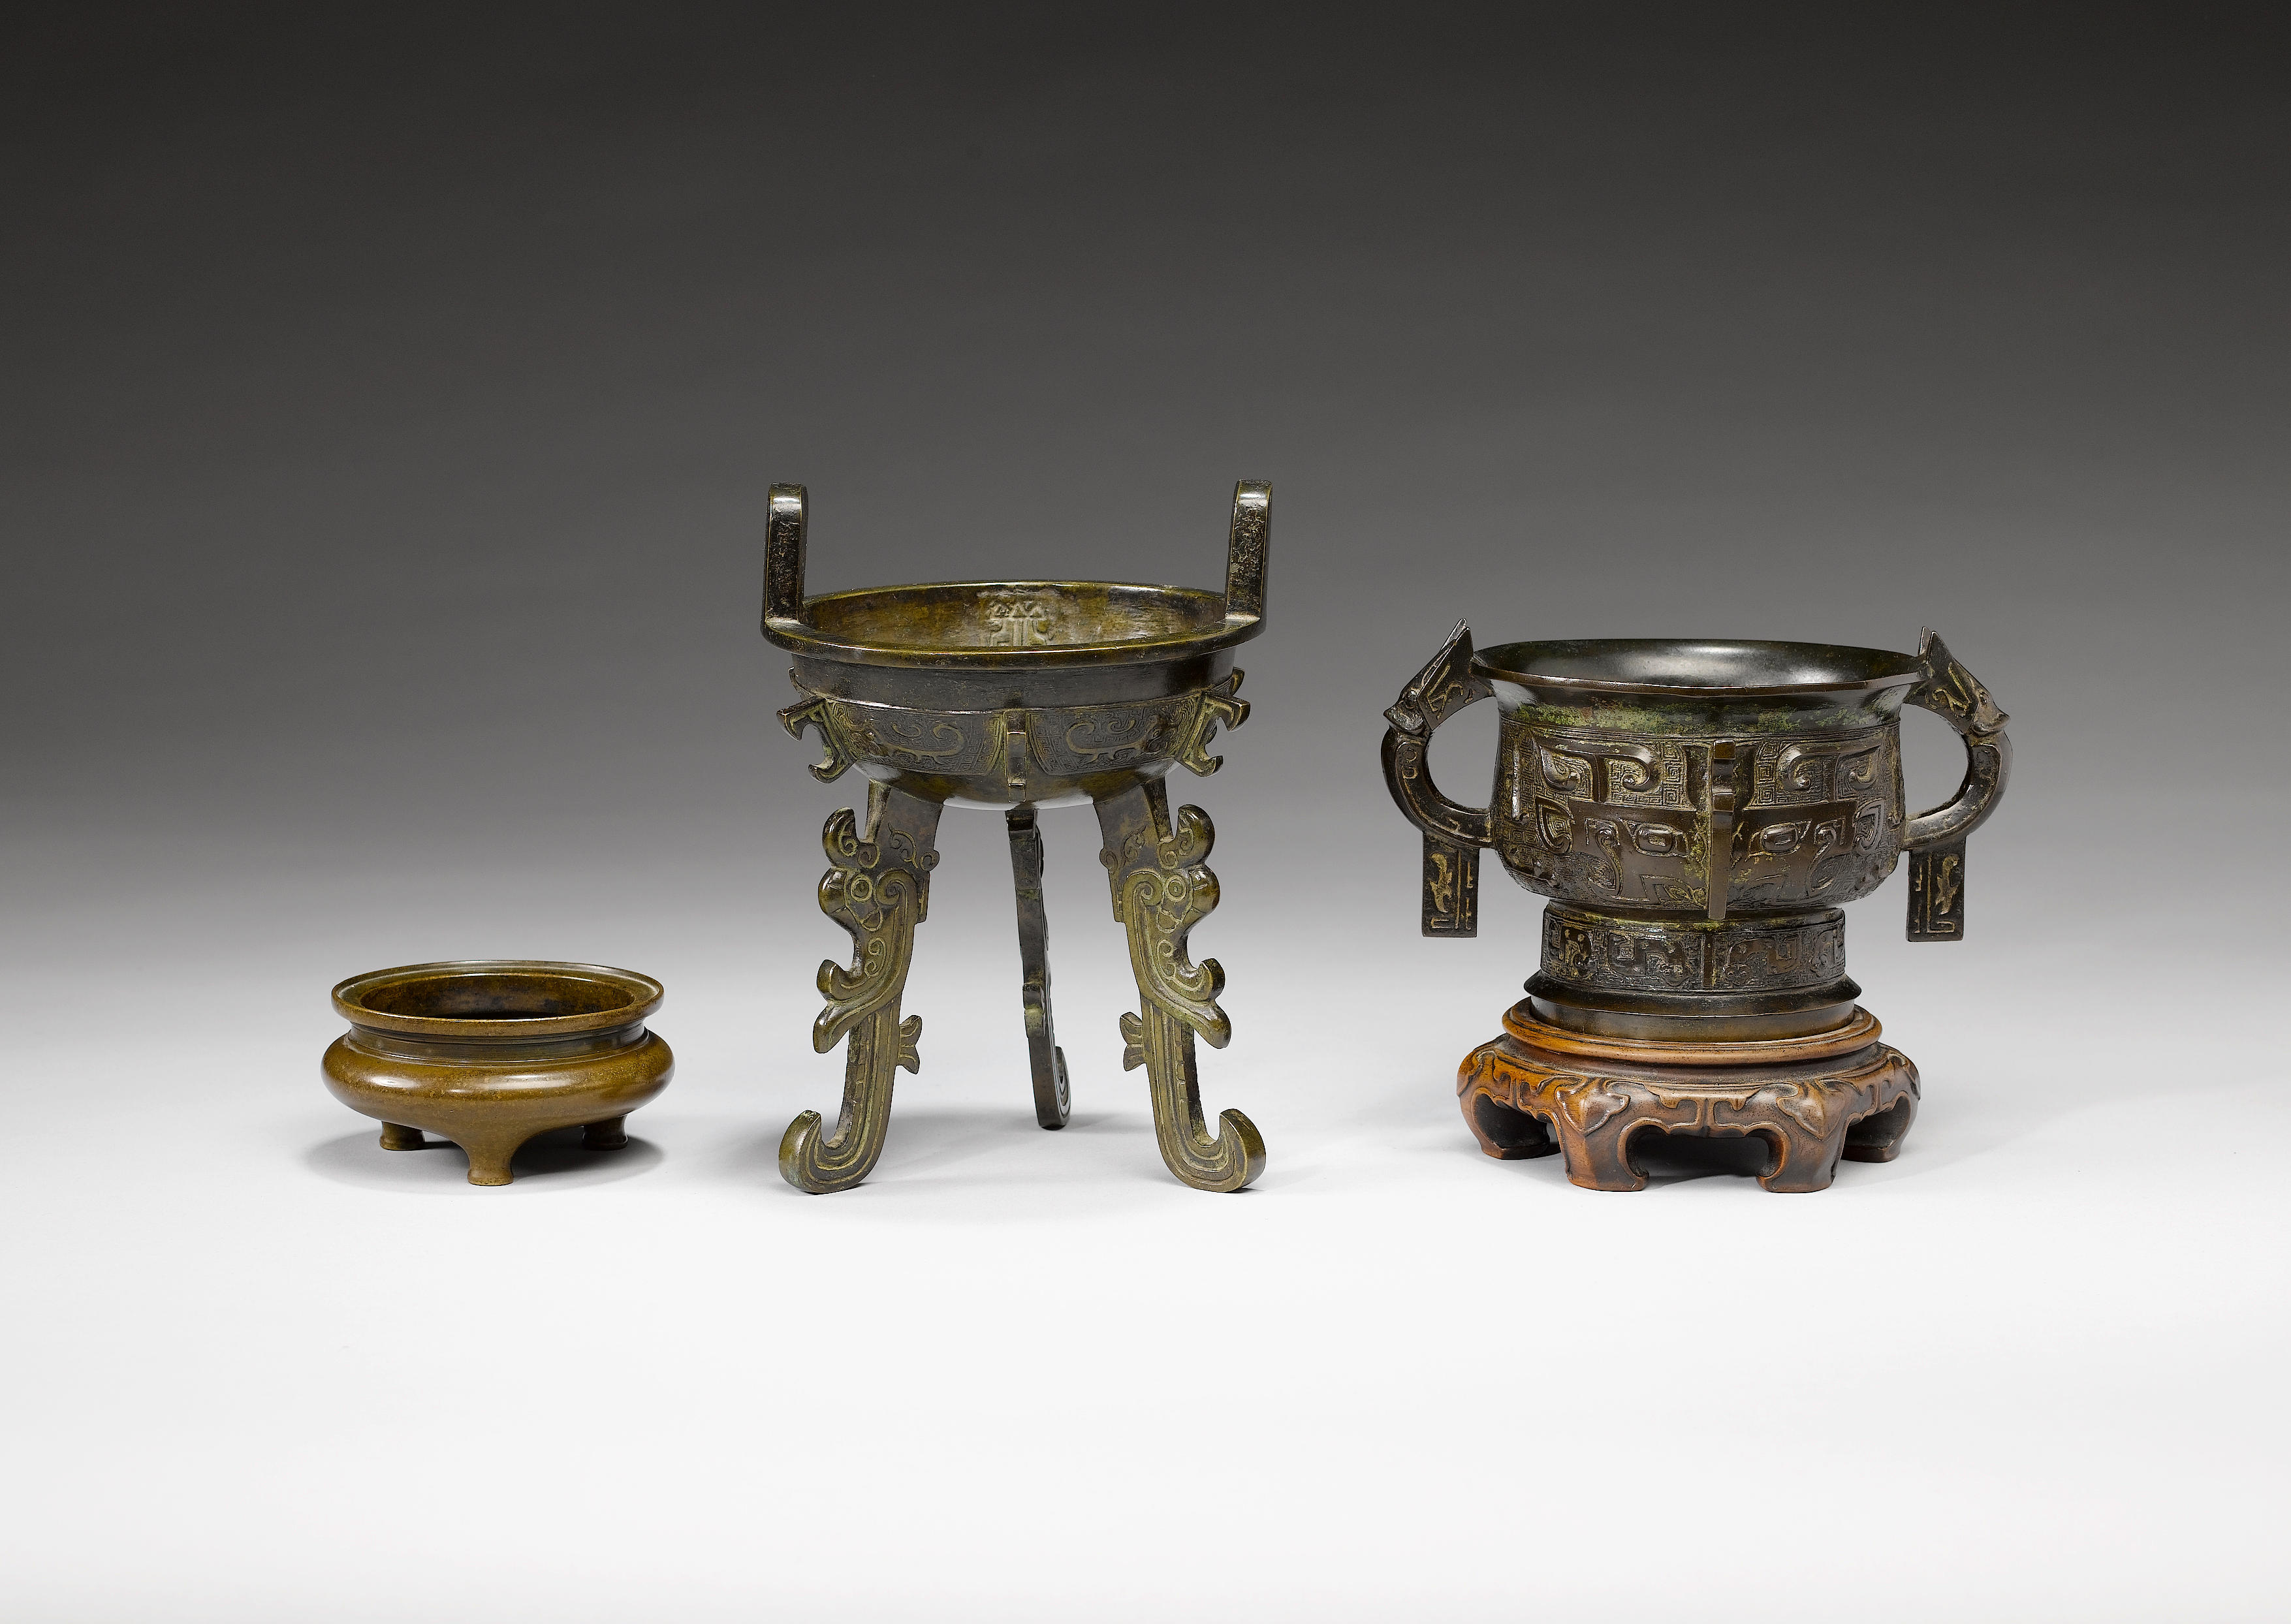 Three bronze archaistic vessels